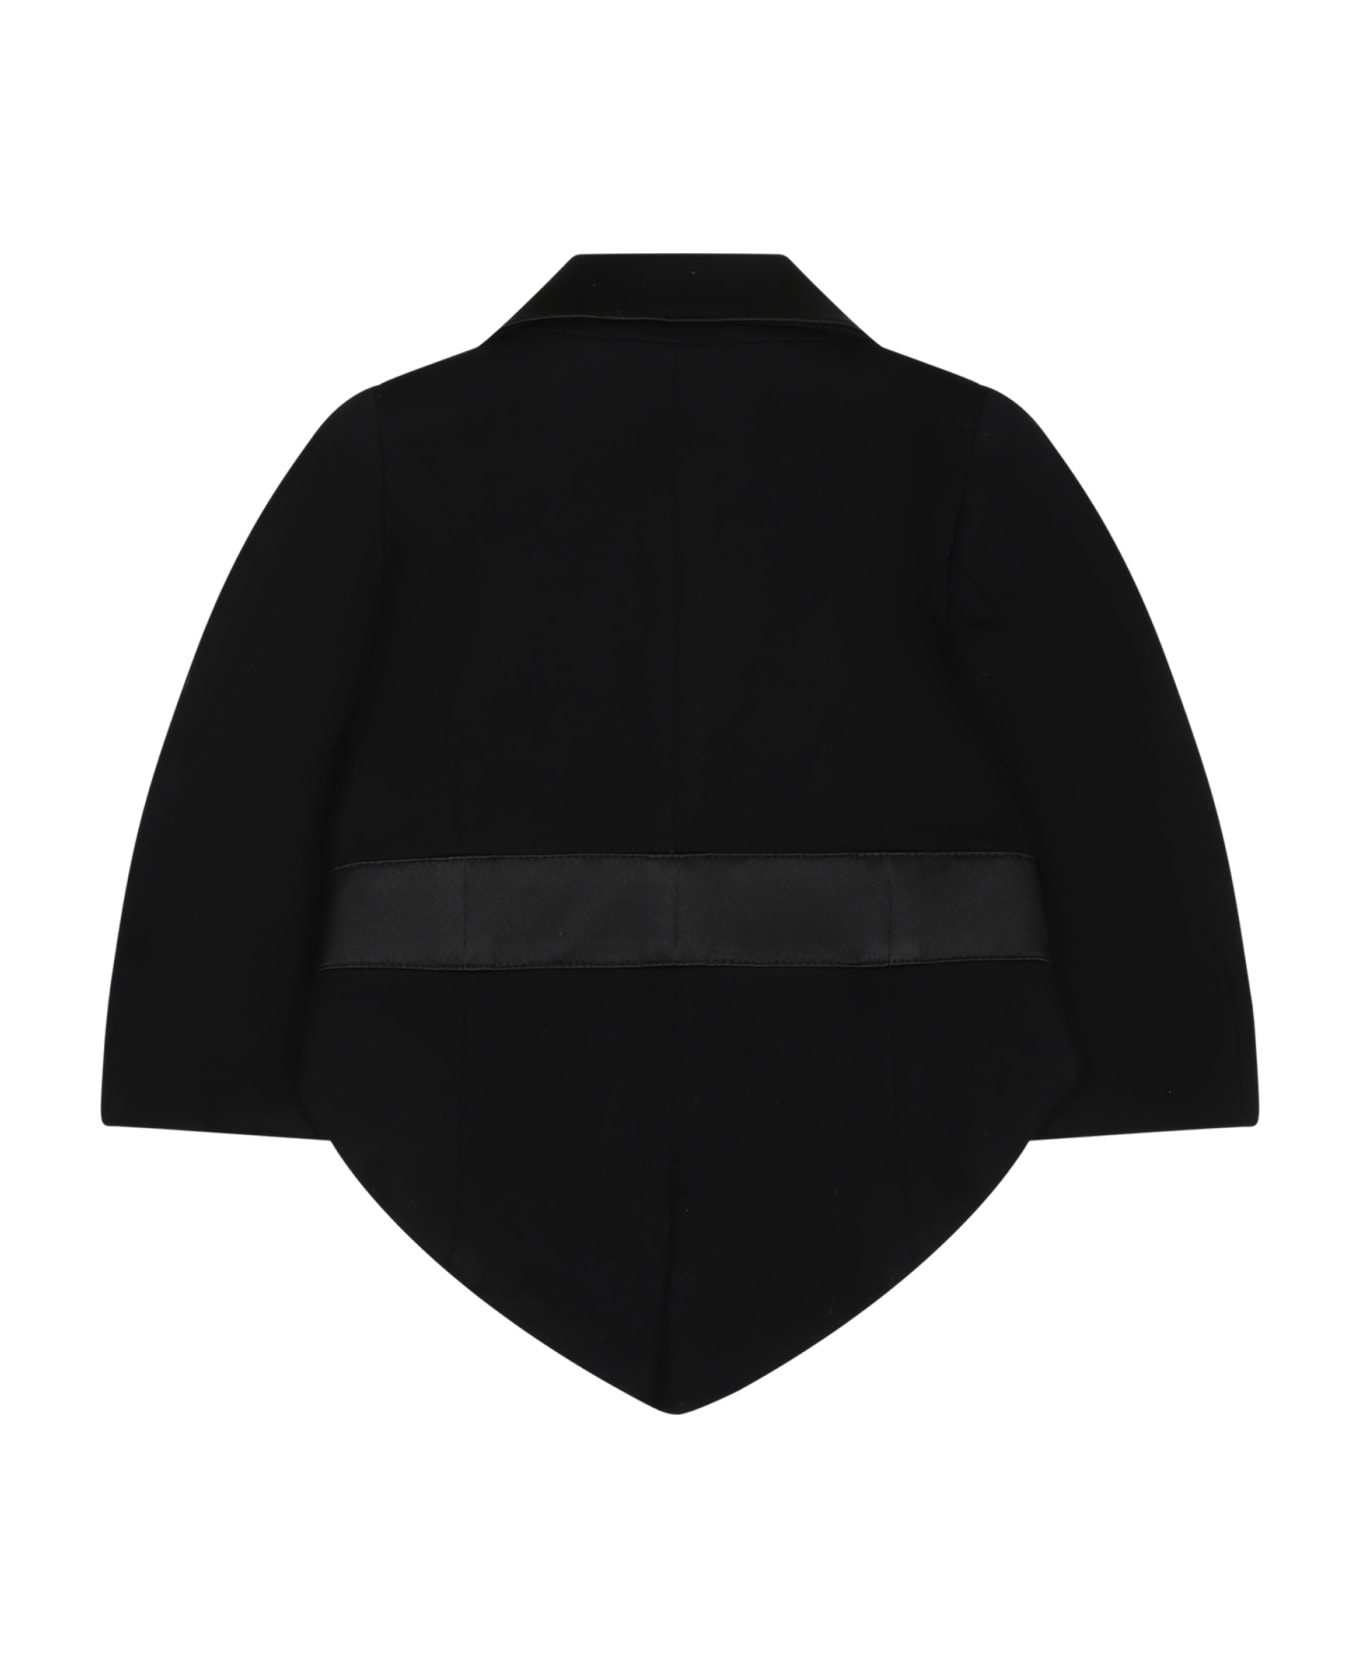 Balmain spodnica Black Jacket For Baby Boy - Black